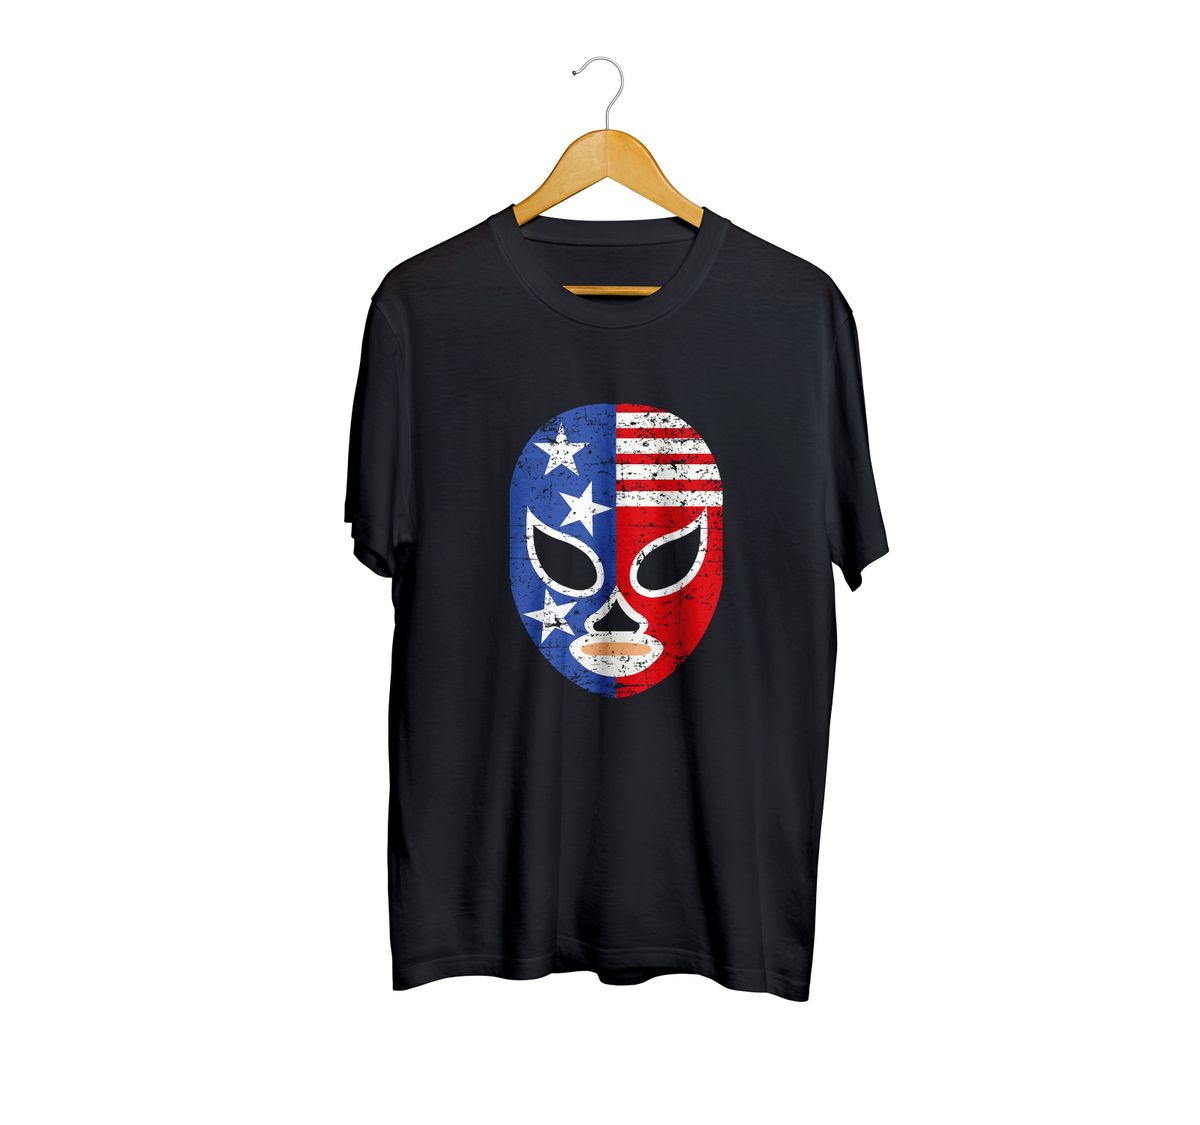 Wrestling Pro Club Black Mask T-Shirt image 1